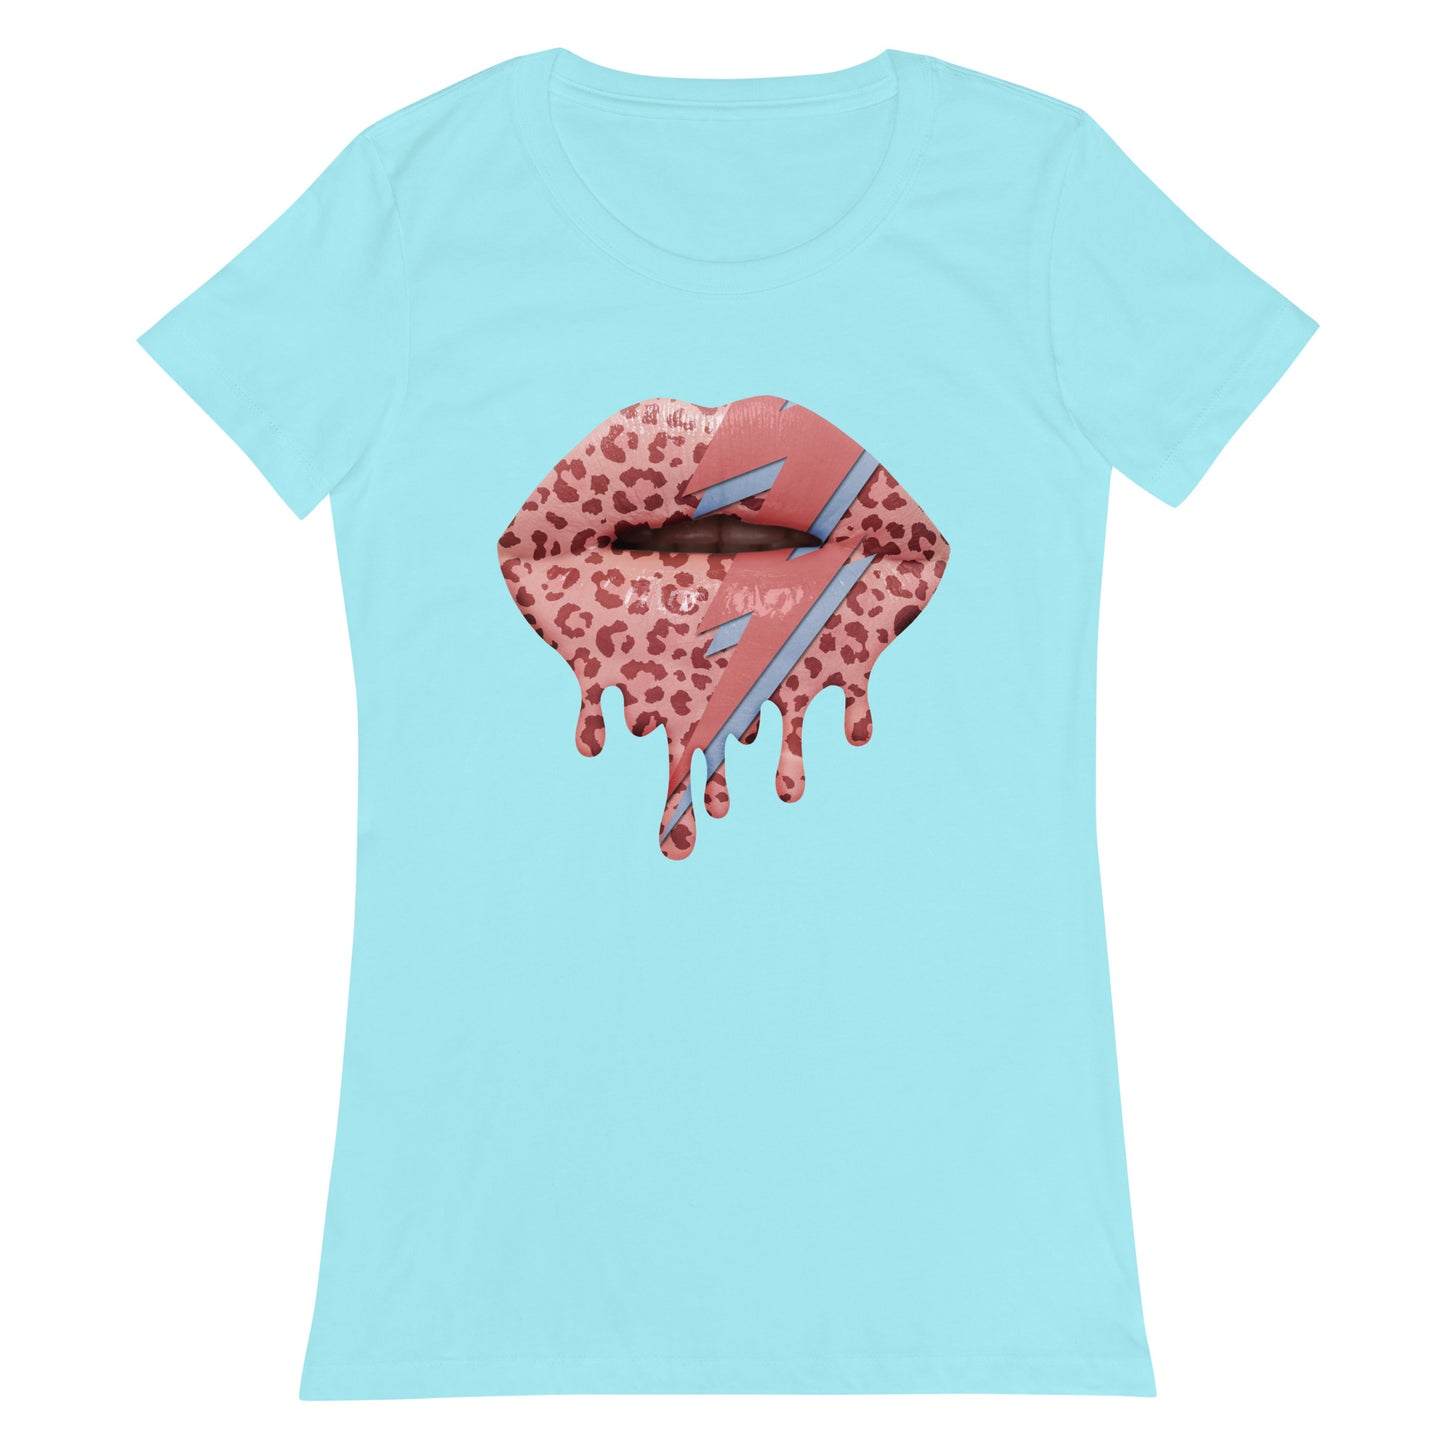 Leopard Lips - Women’s fitted t-shirt